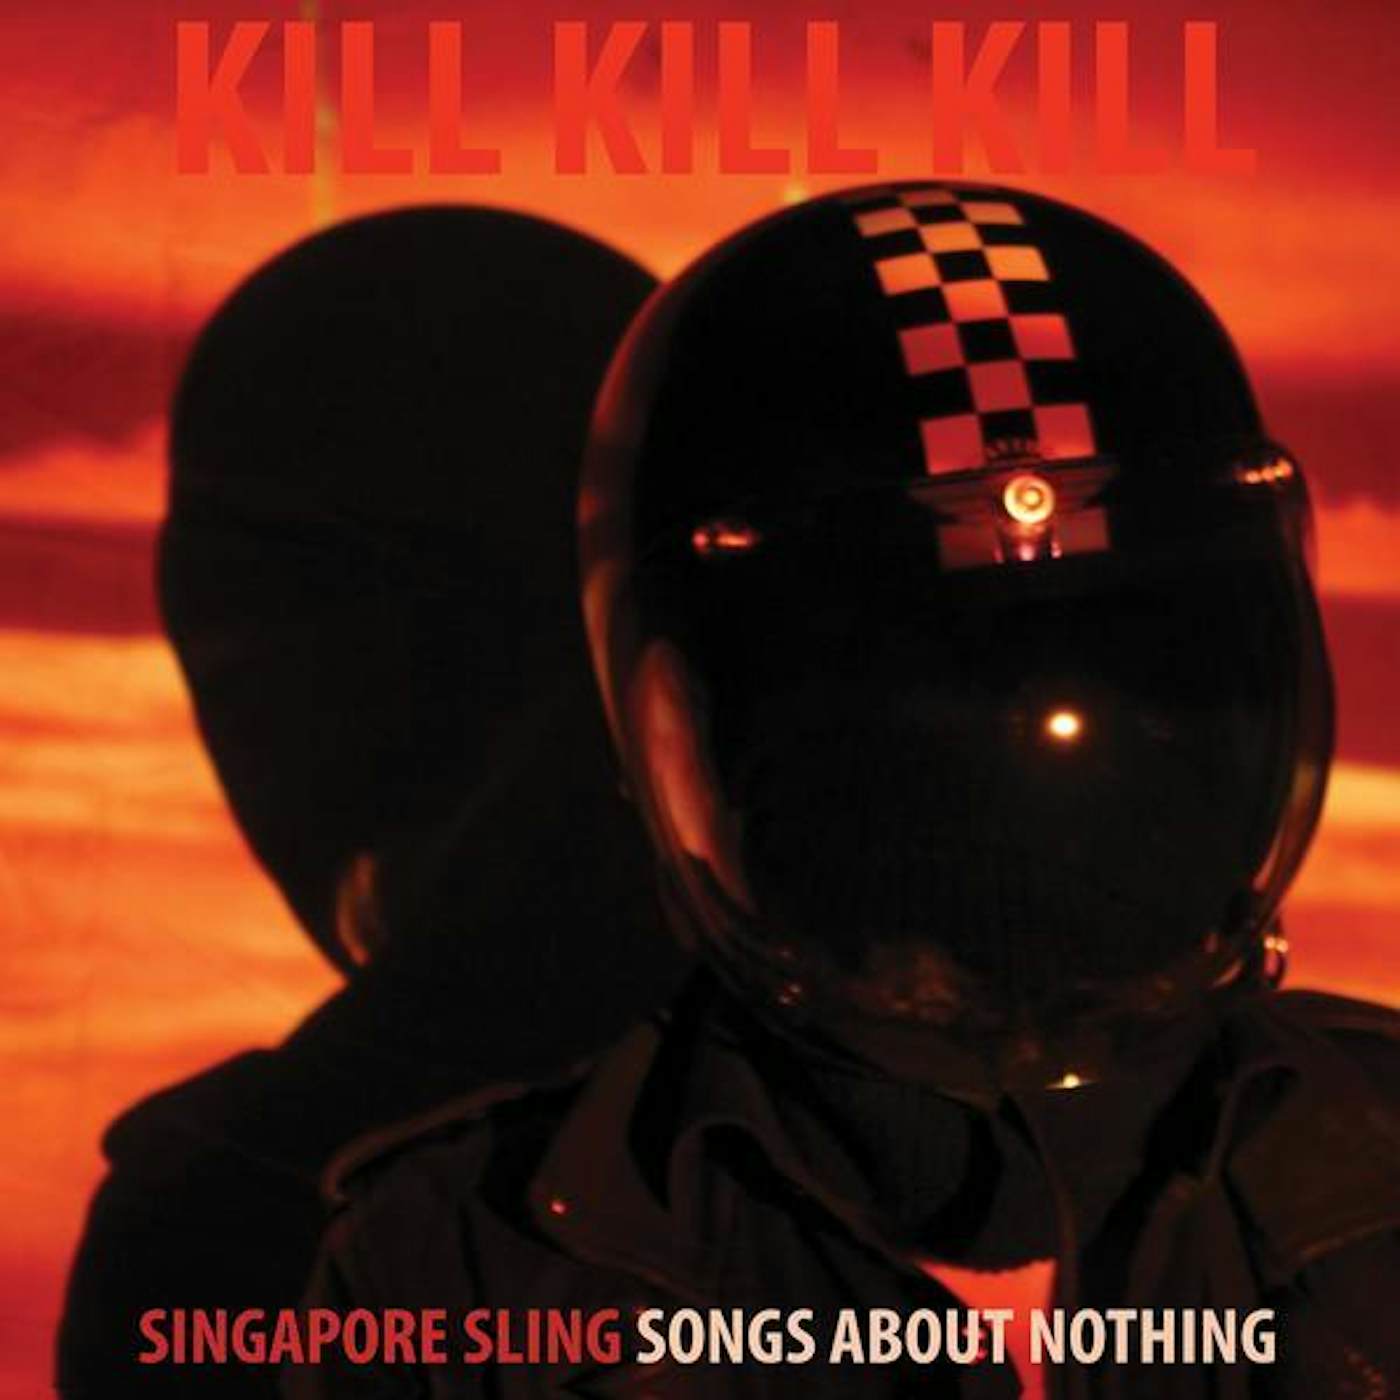 Singapore Sling 'Kill Kill Kill (Songs About Nothing)' Vinyl Record